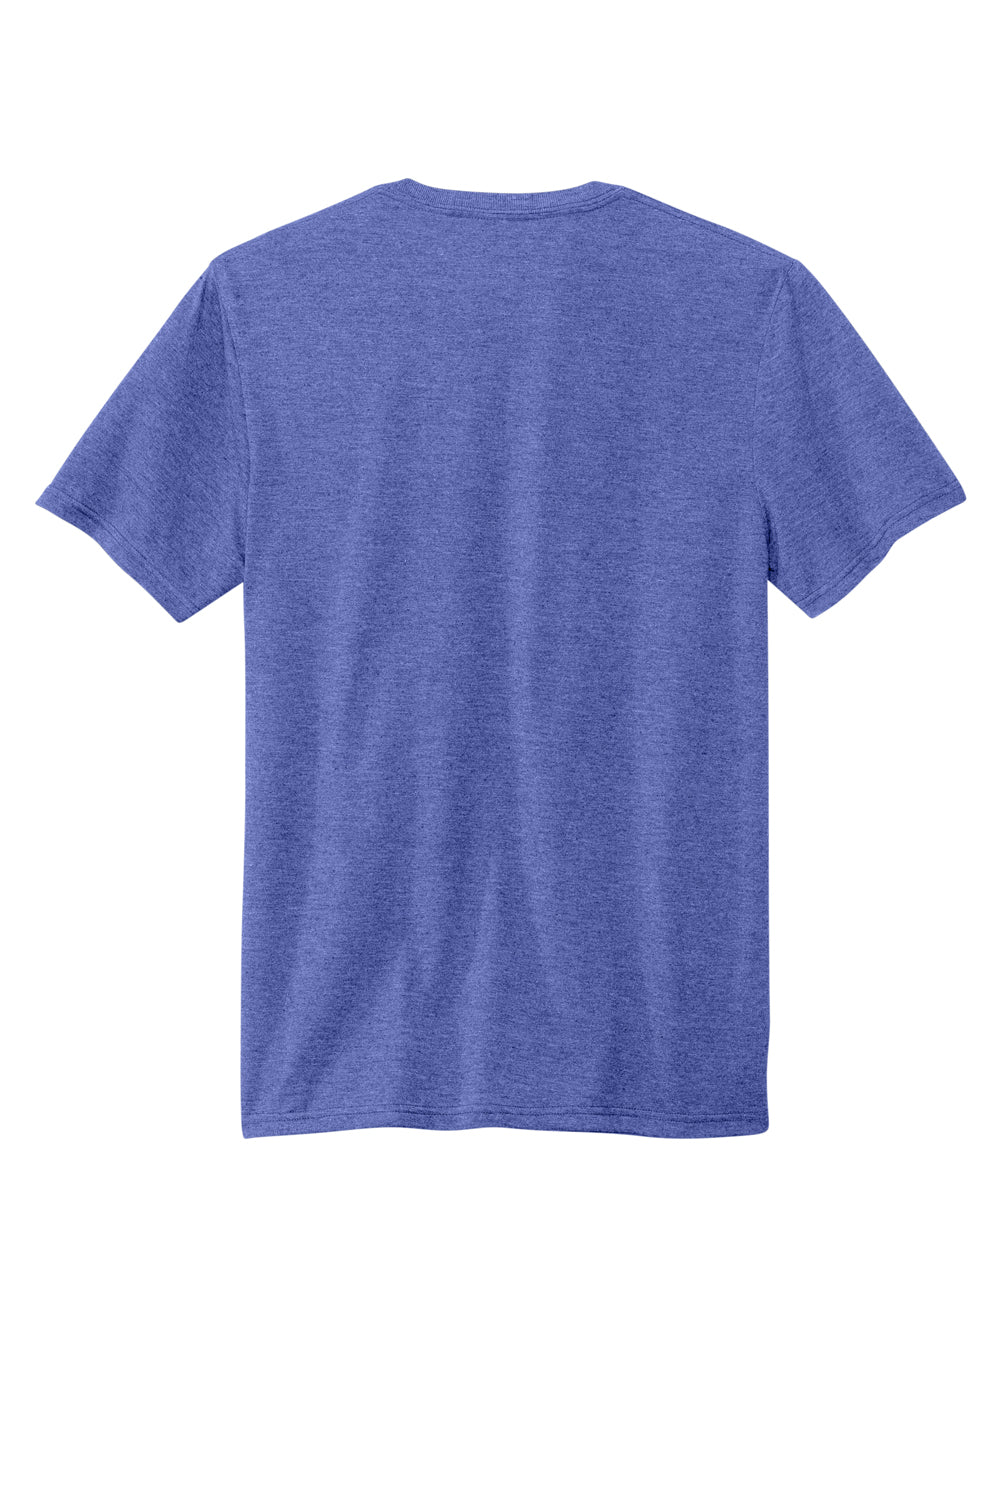 Volunteer Knitwear VL40 Short Sleeve Crewneck T-Shirt Heather True Royal Blue Flat Back